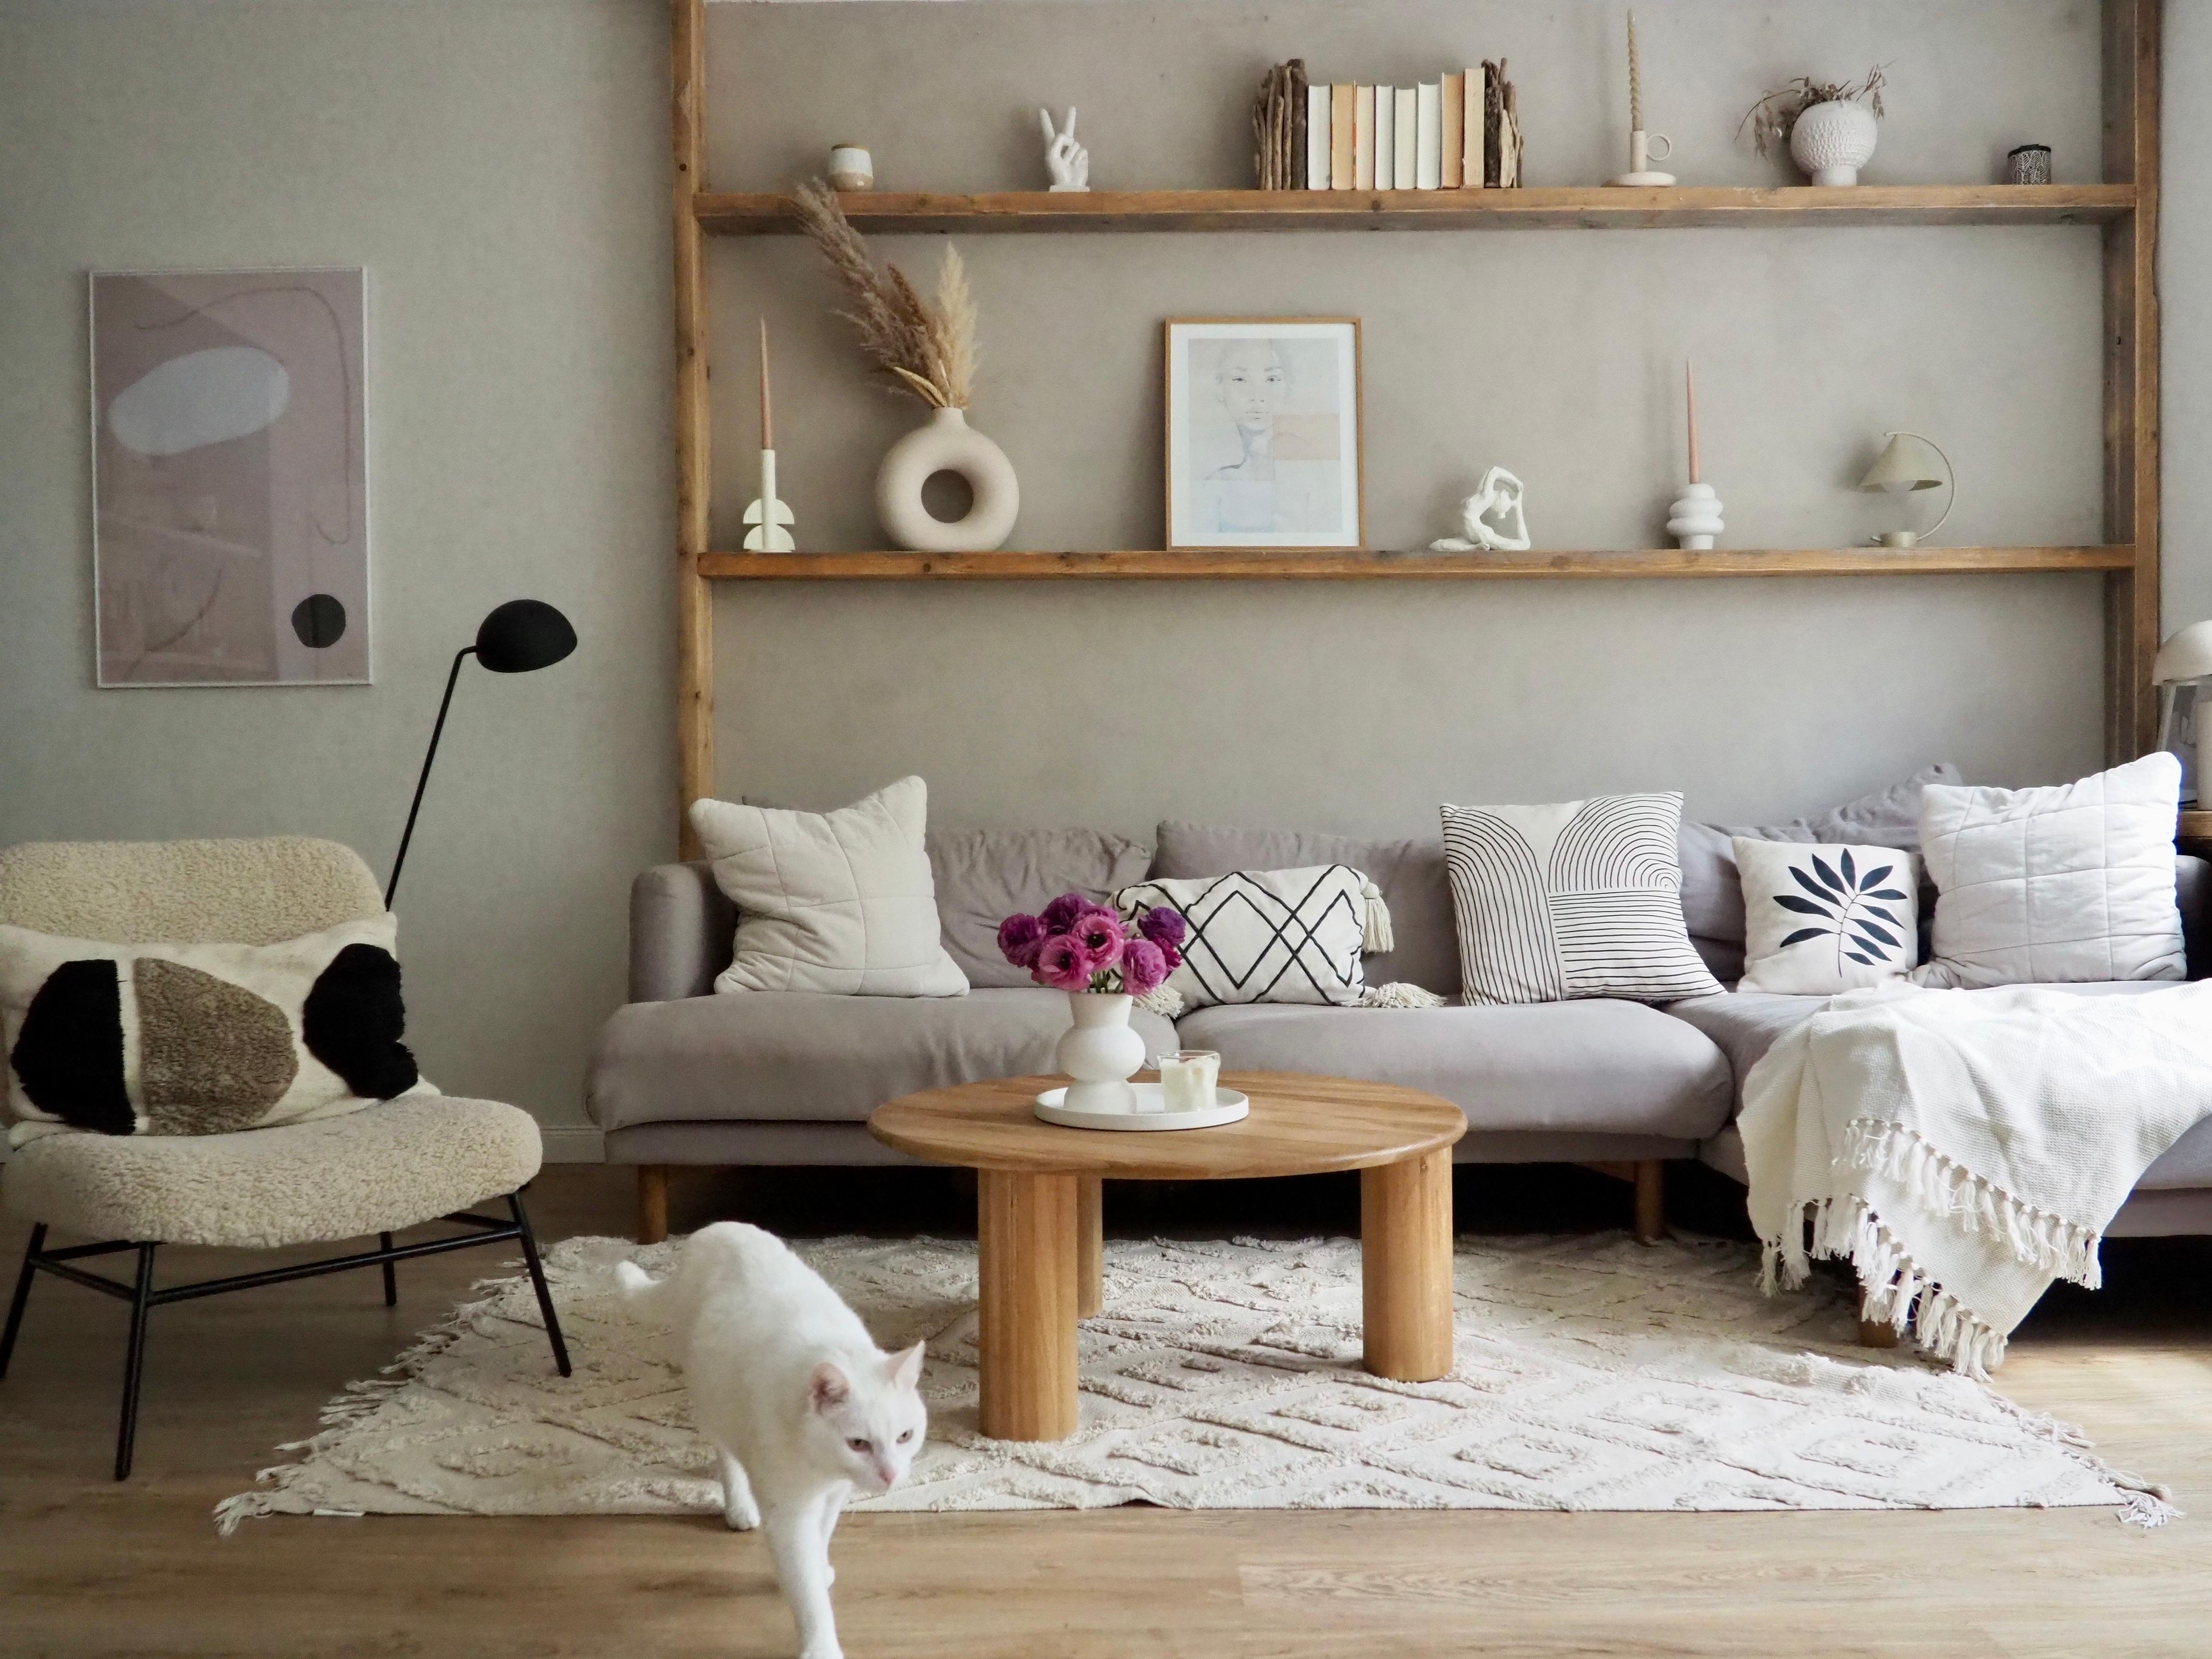 #wohnzimmer #COUCHstyle #couchmagazin #coffeetable
